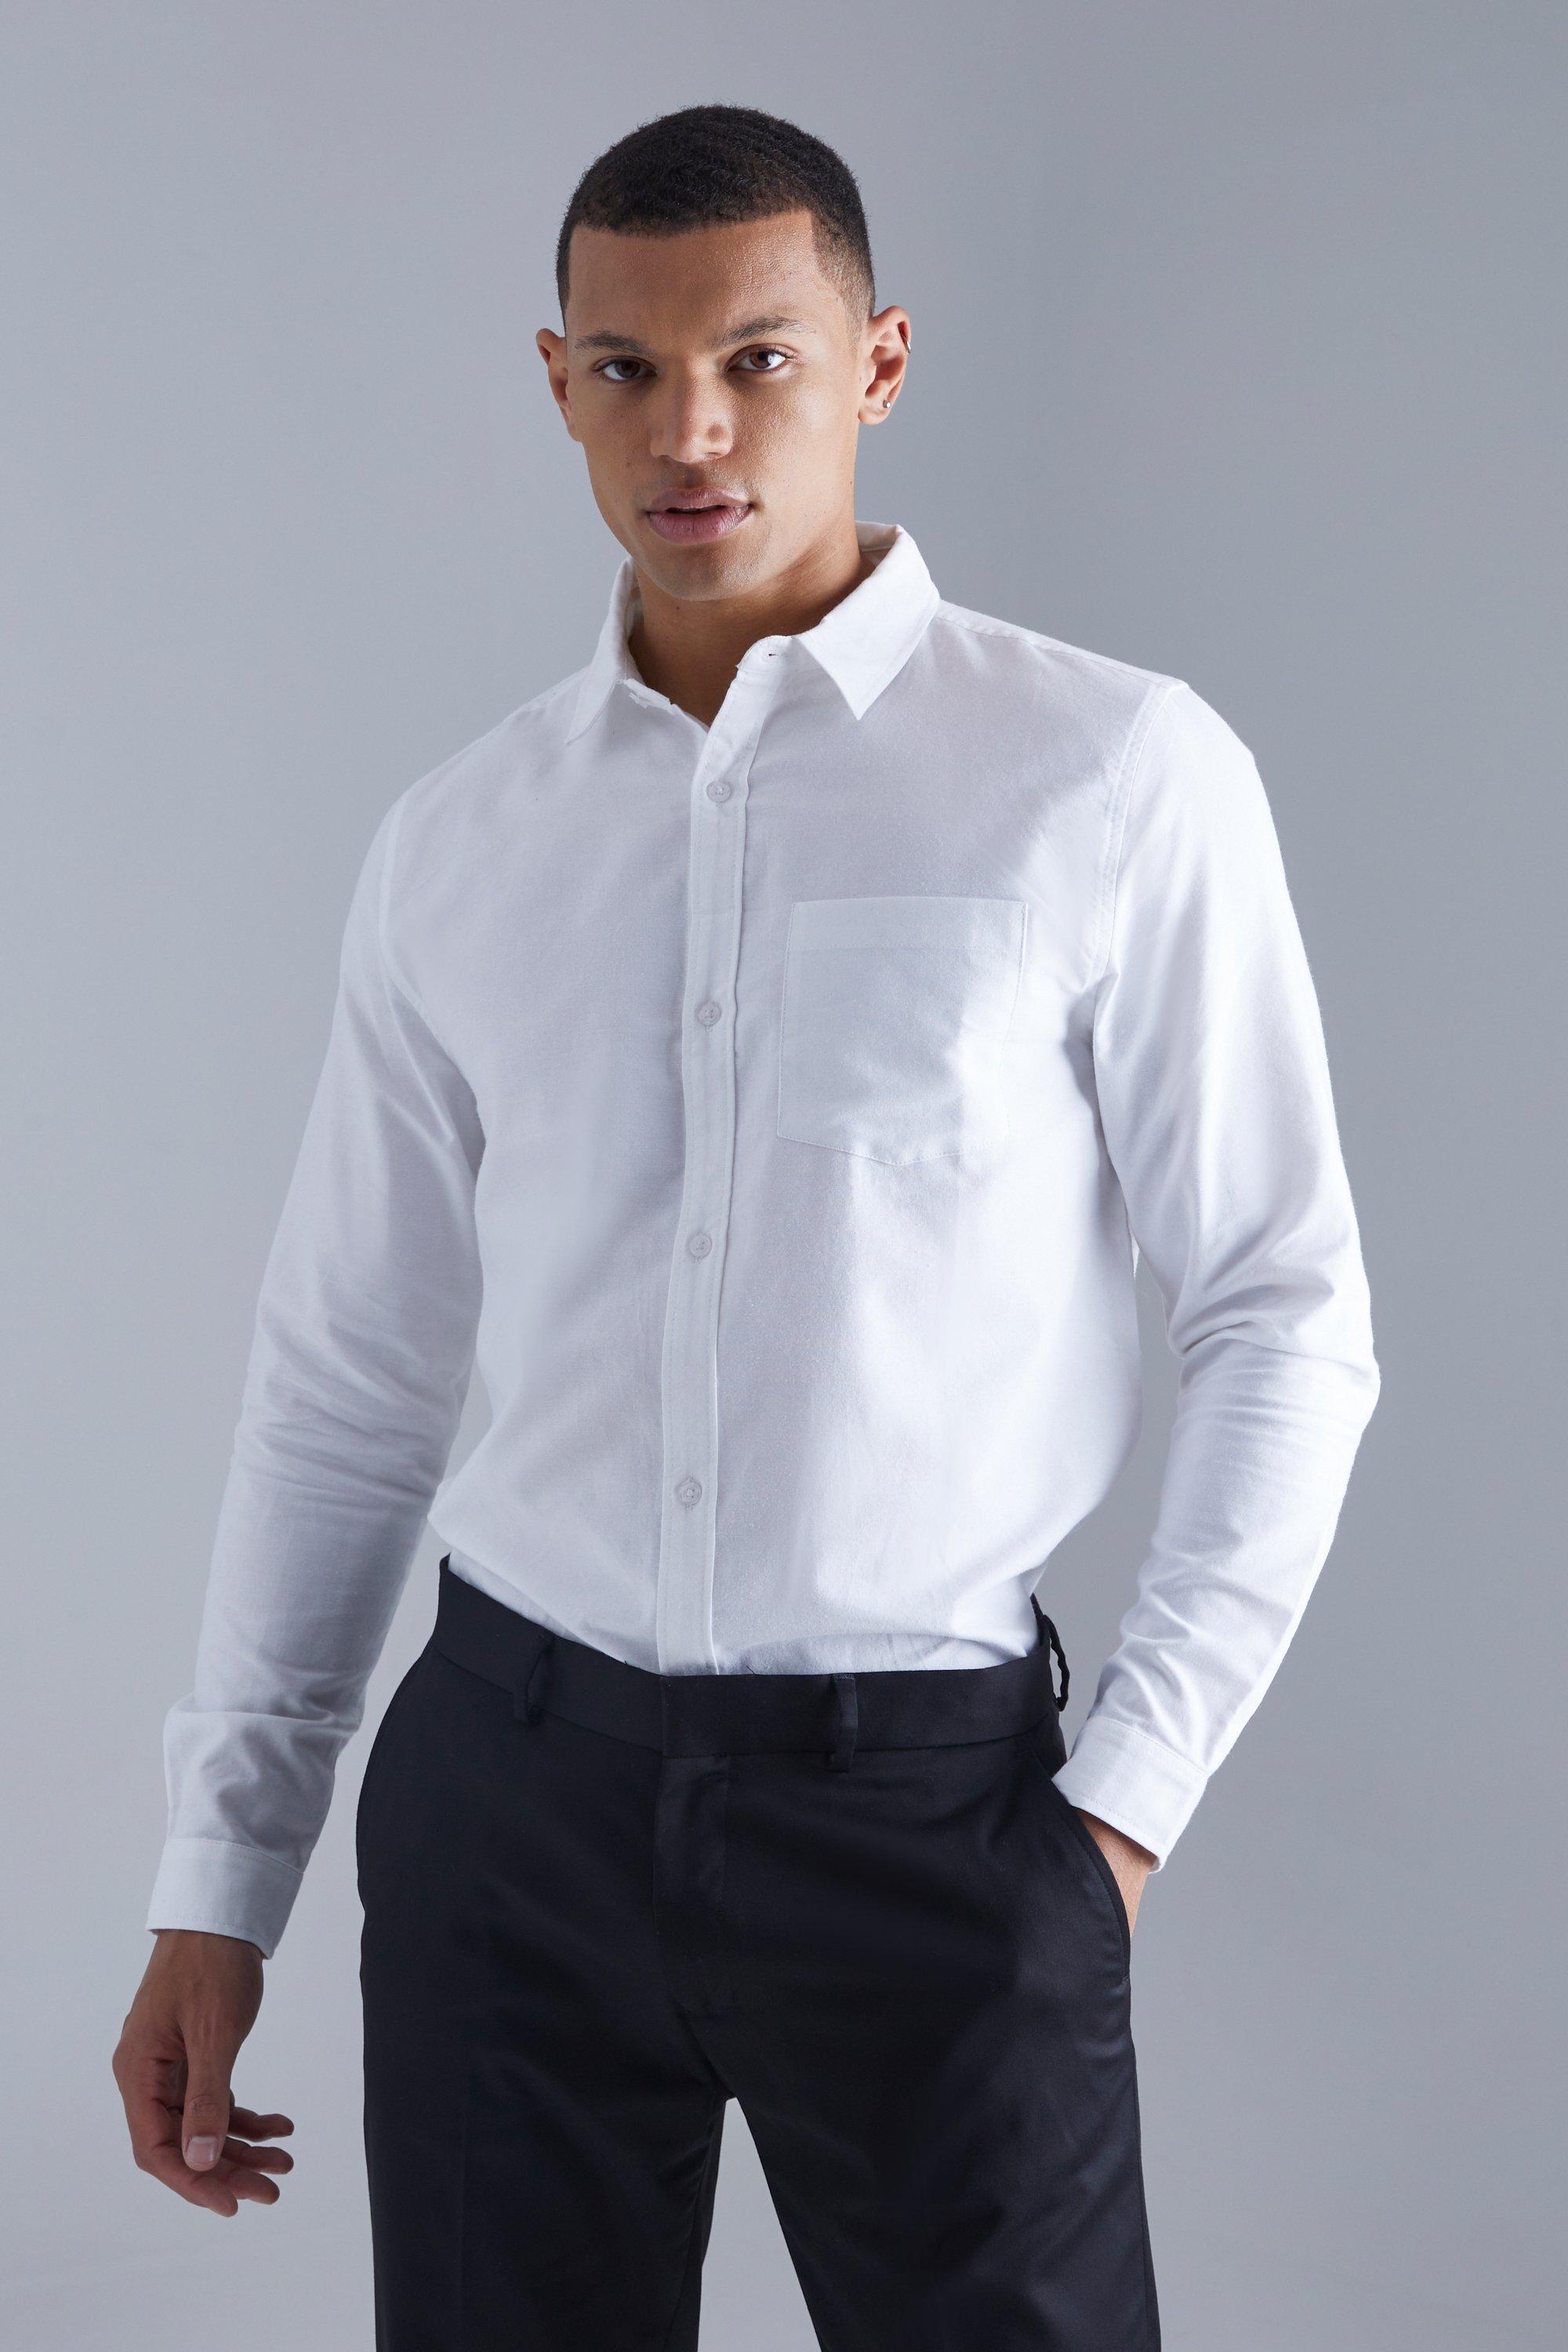 Nautica Young Men's School Uniform Long Sleeve Performance Oxford  Button-Down Shirt, Navy, X-Large 